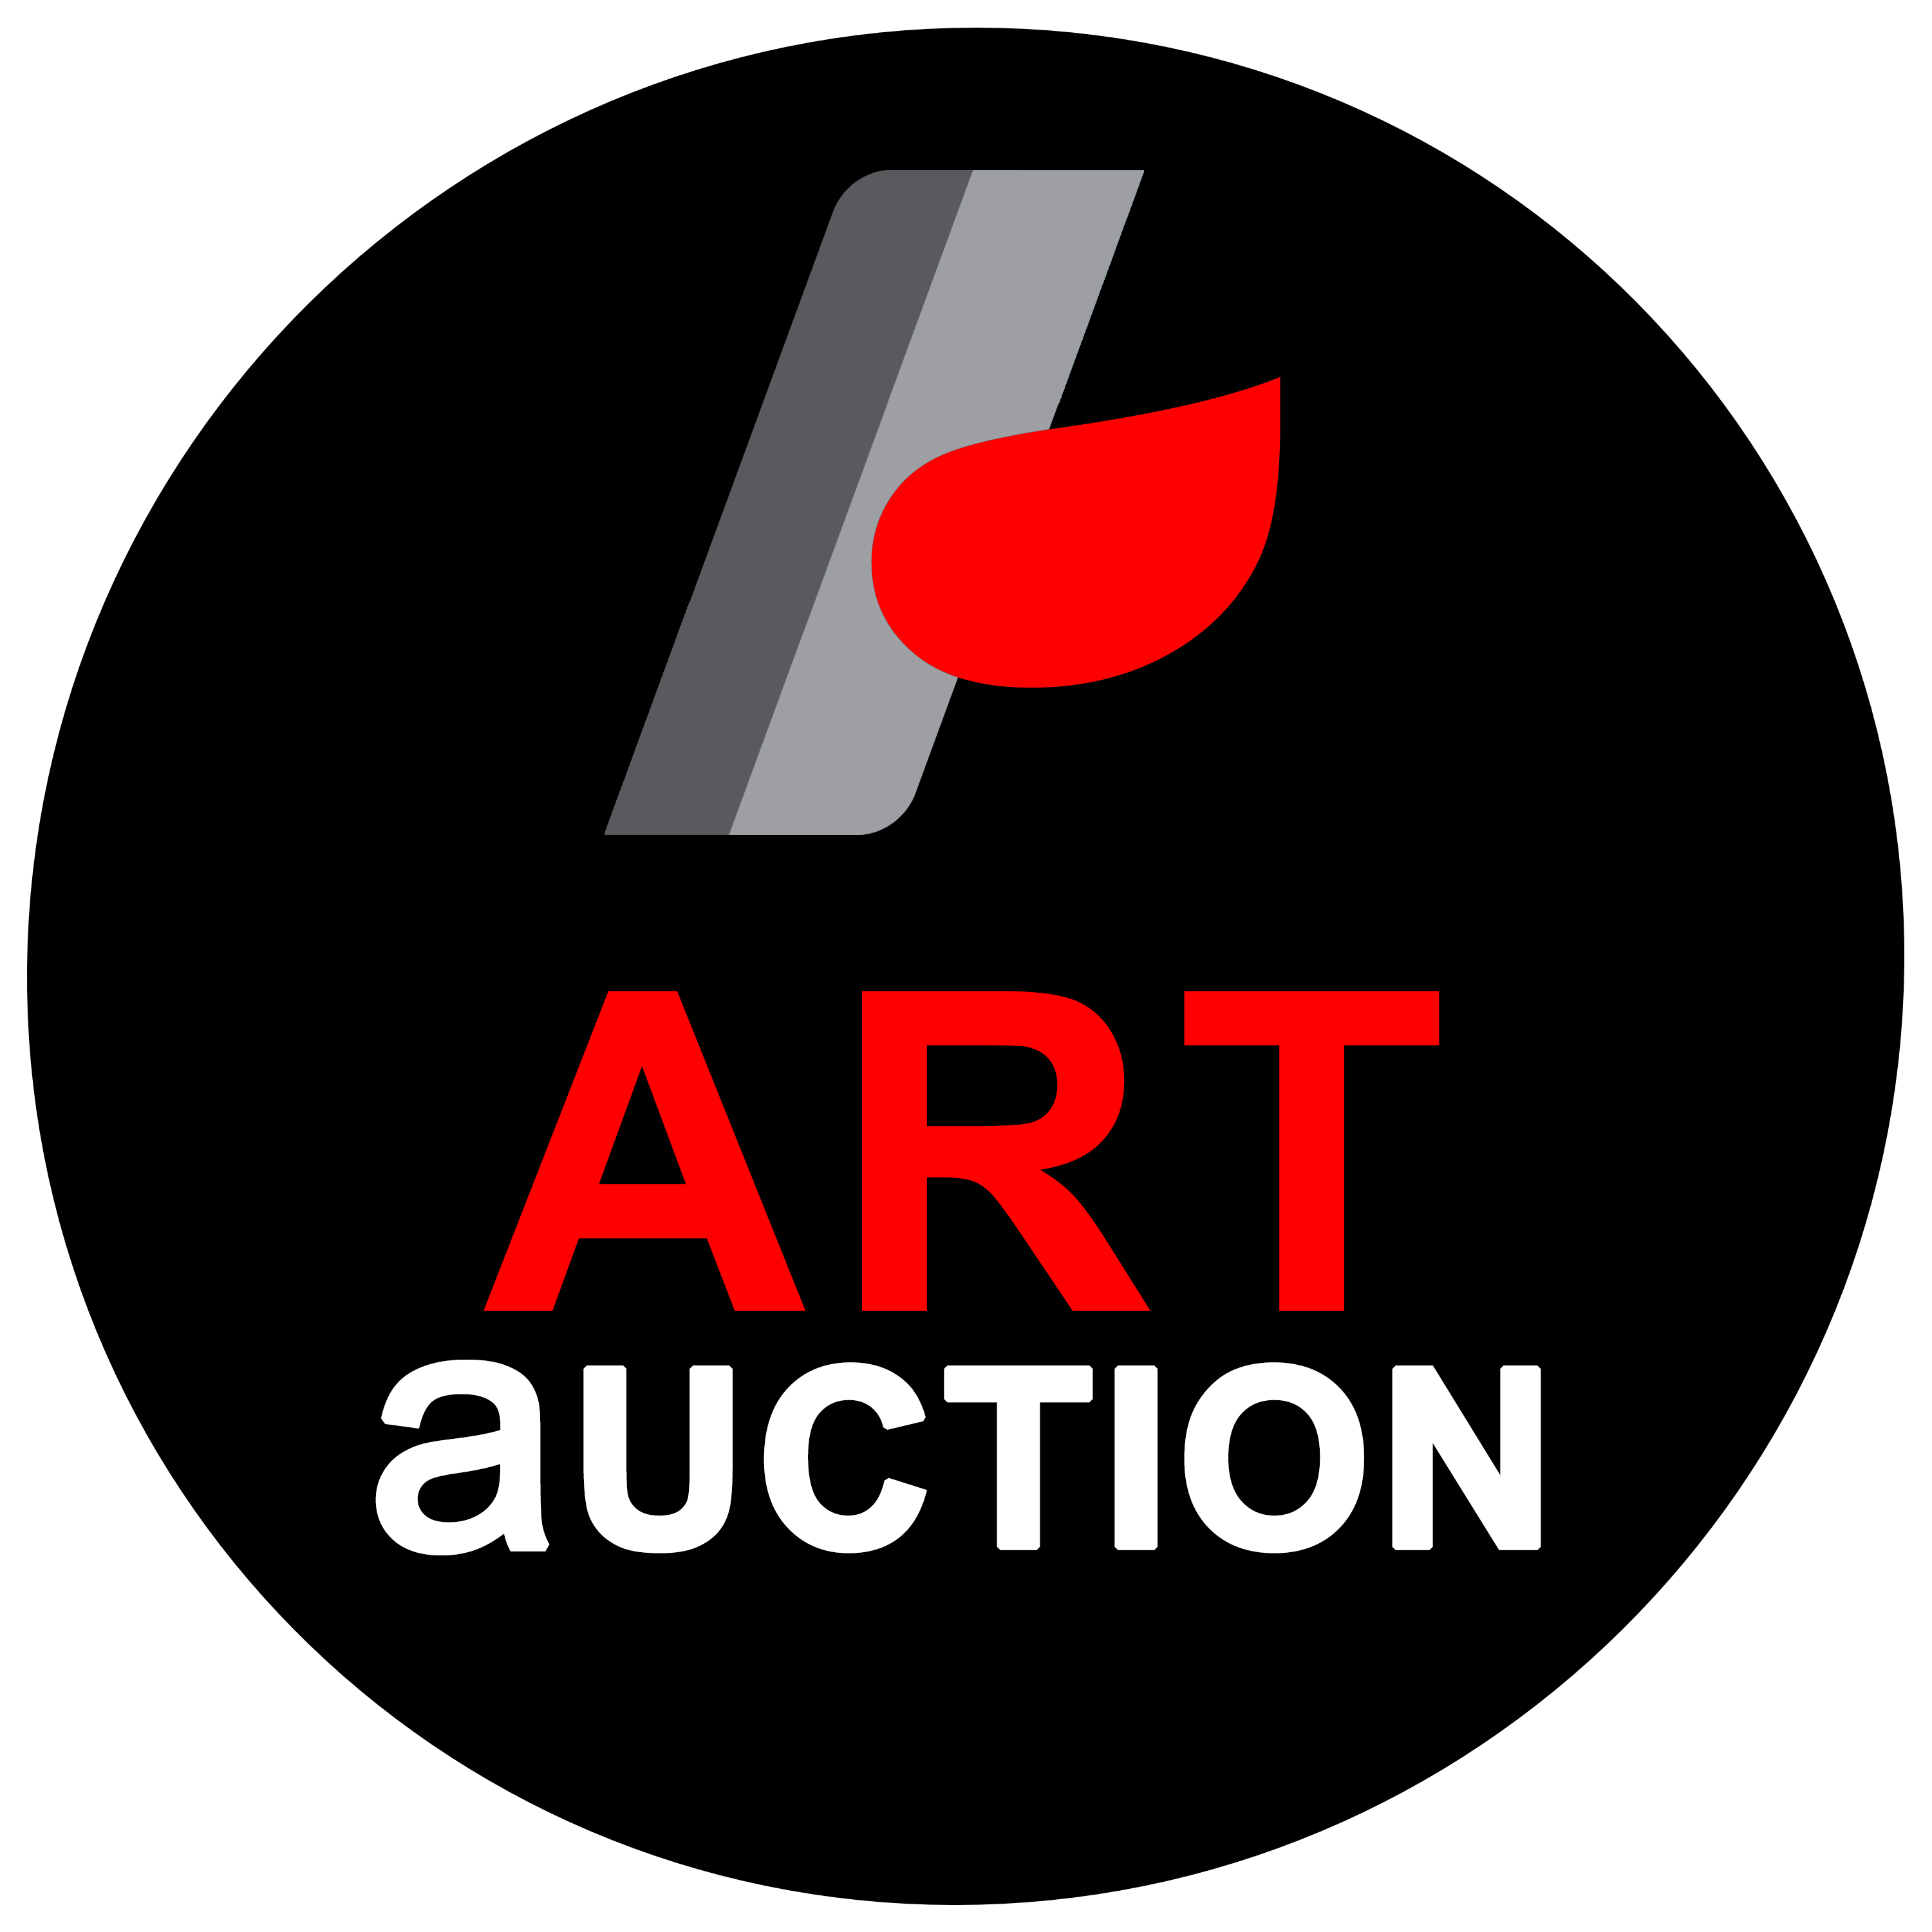 ART AUCTION LOGO